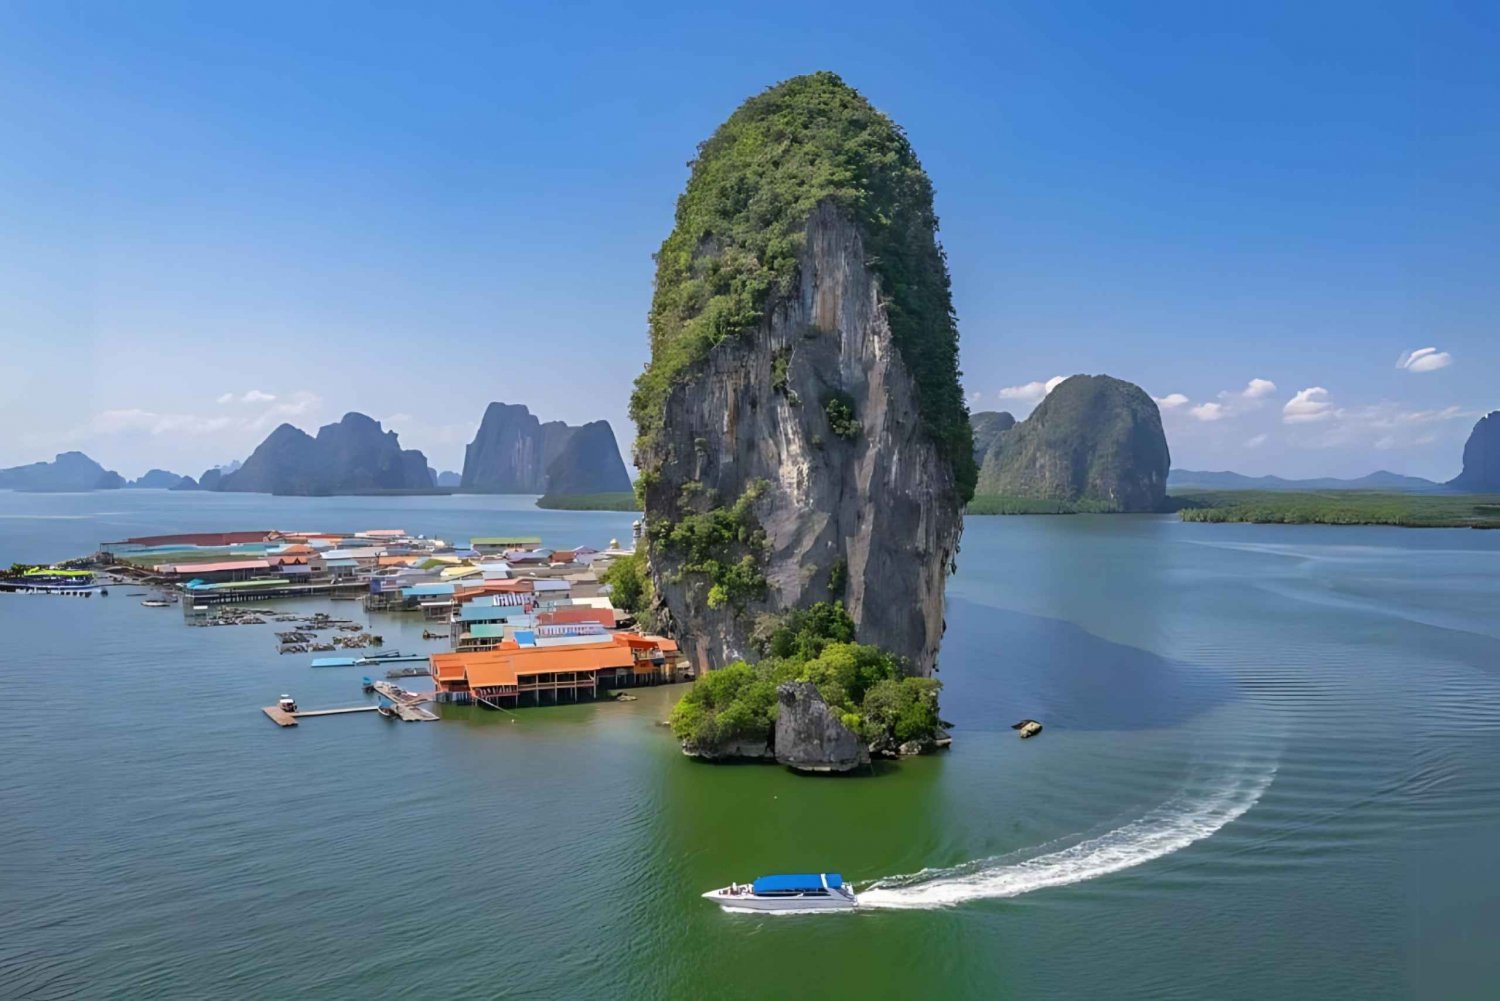 Phuket : Canoa de mar por la isla de James Bond en lancha rápida